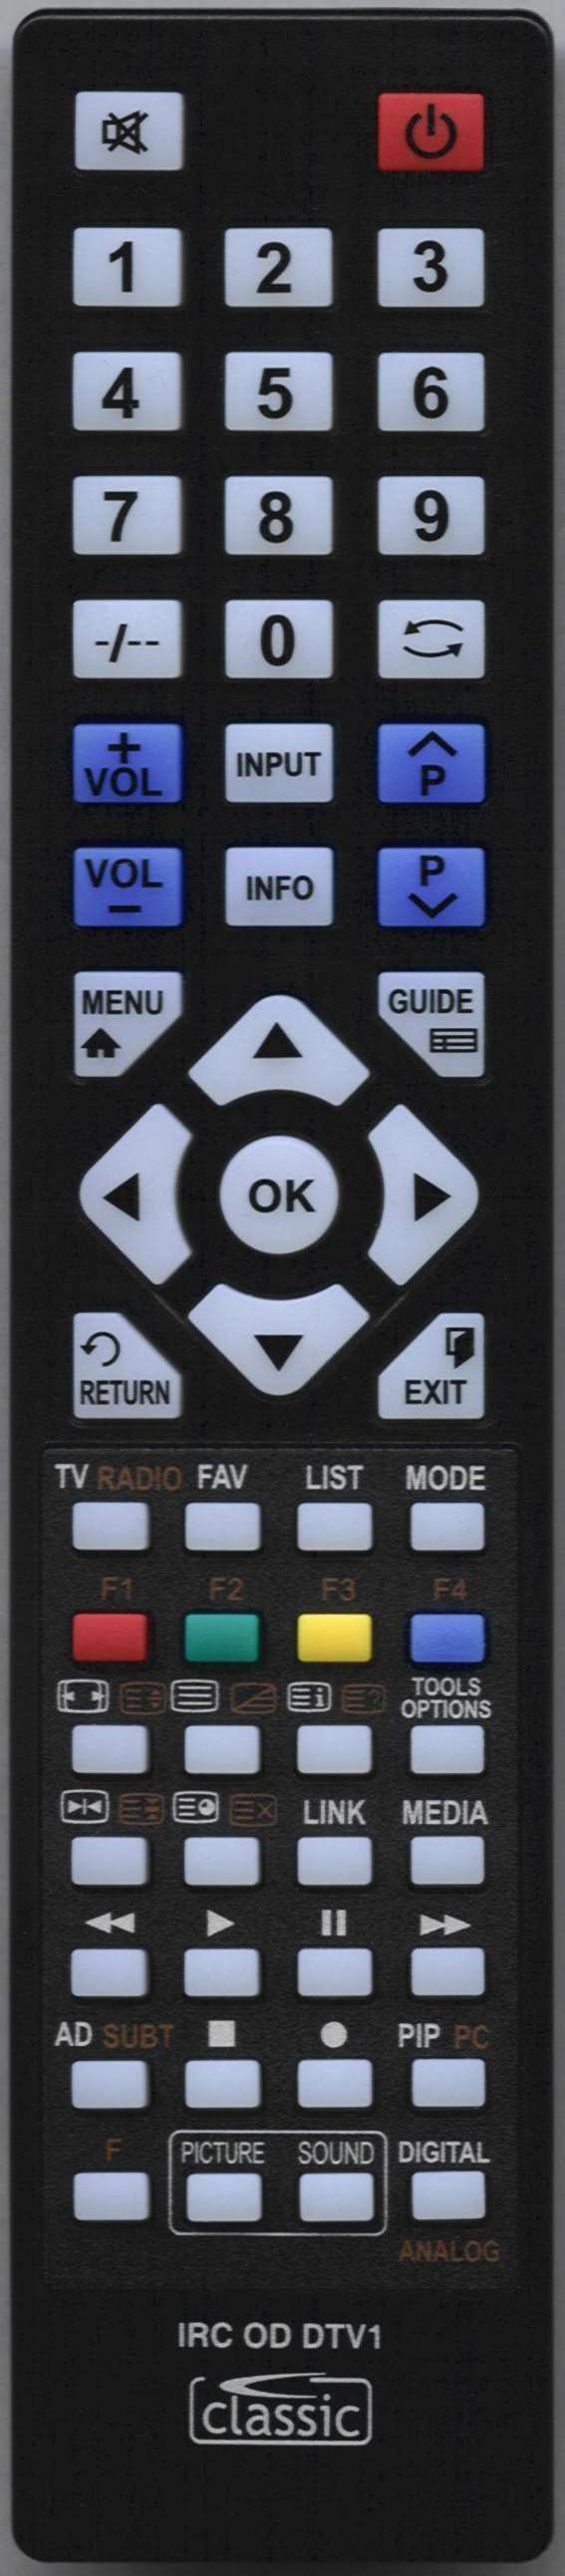 SEIKI SE40FY01UK Remote Control